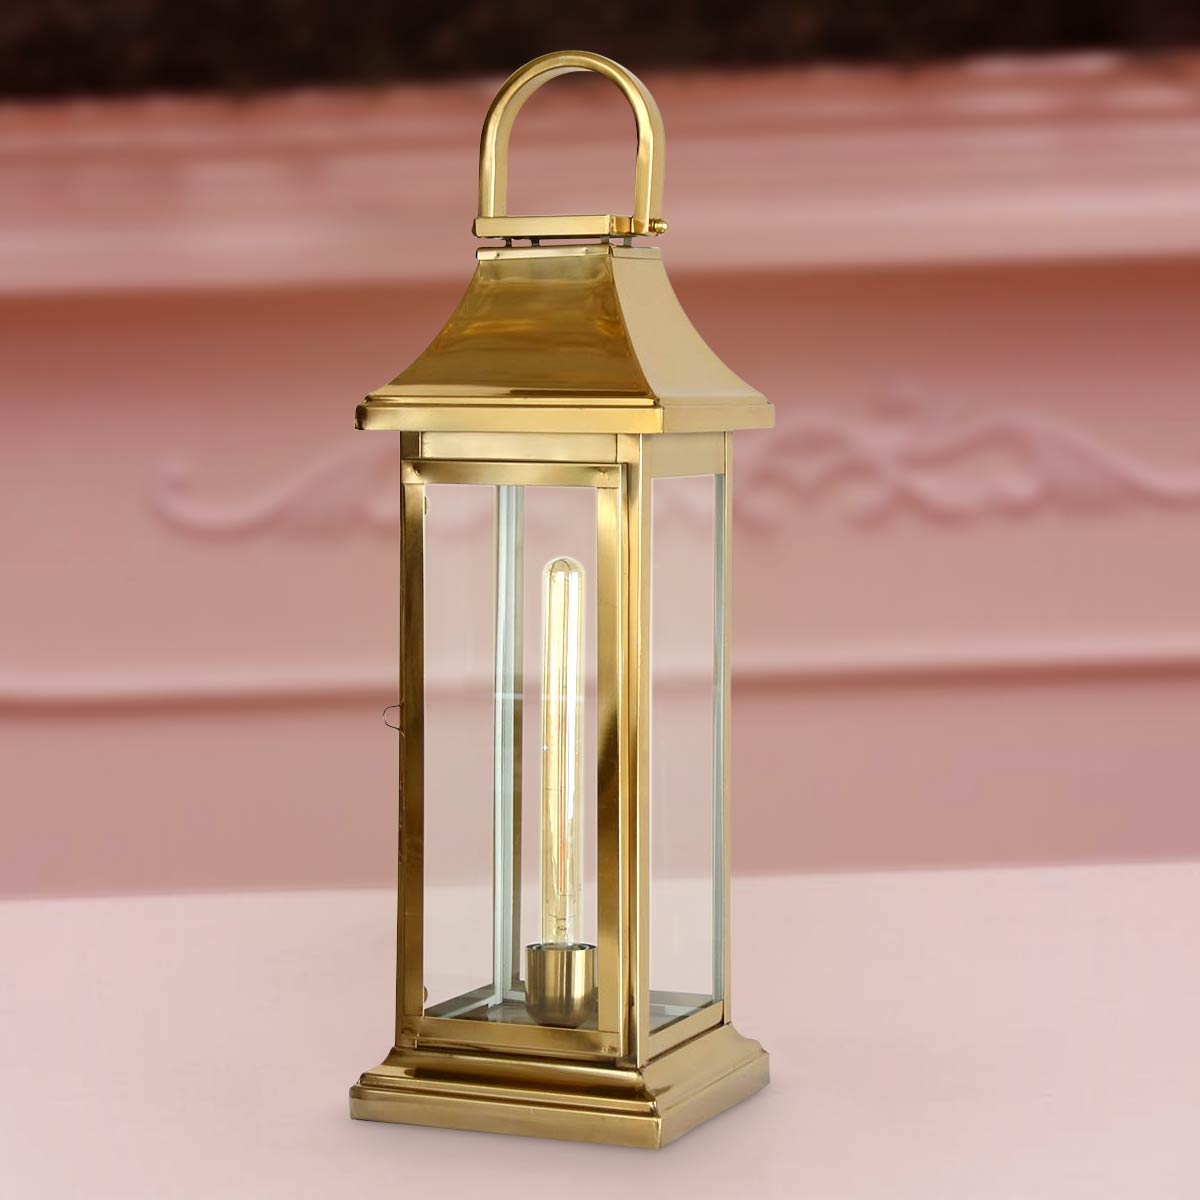 Handmade Stainless Steel Lantern 149346 Large - Gold